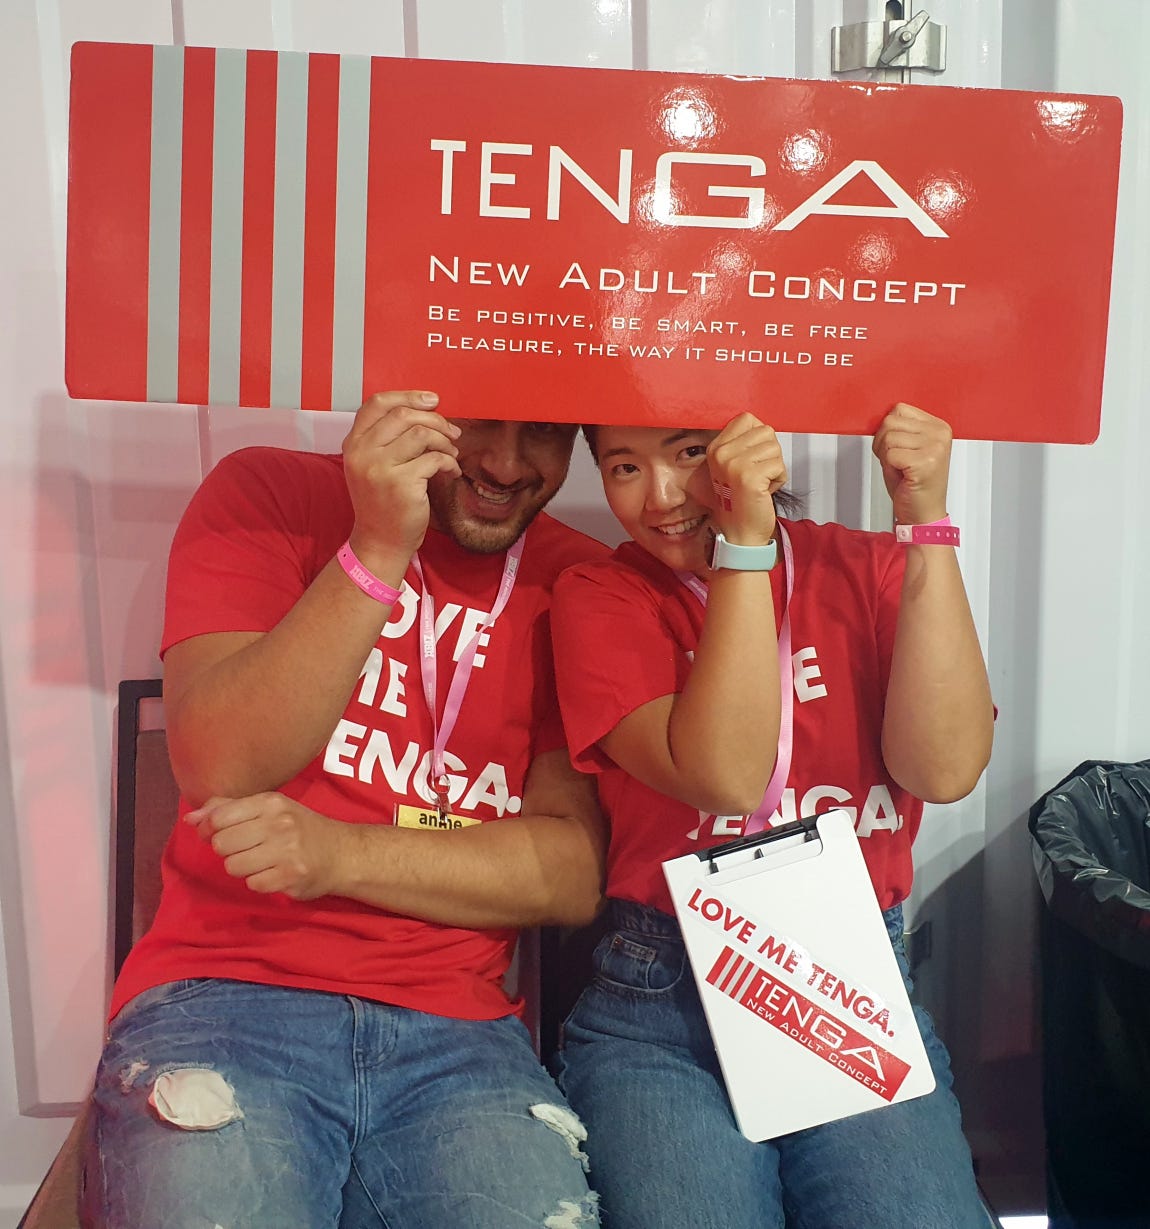 TENGA Global (@tenga_global) • Instagram photos and videos